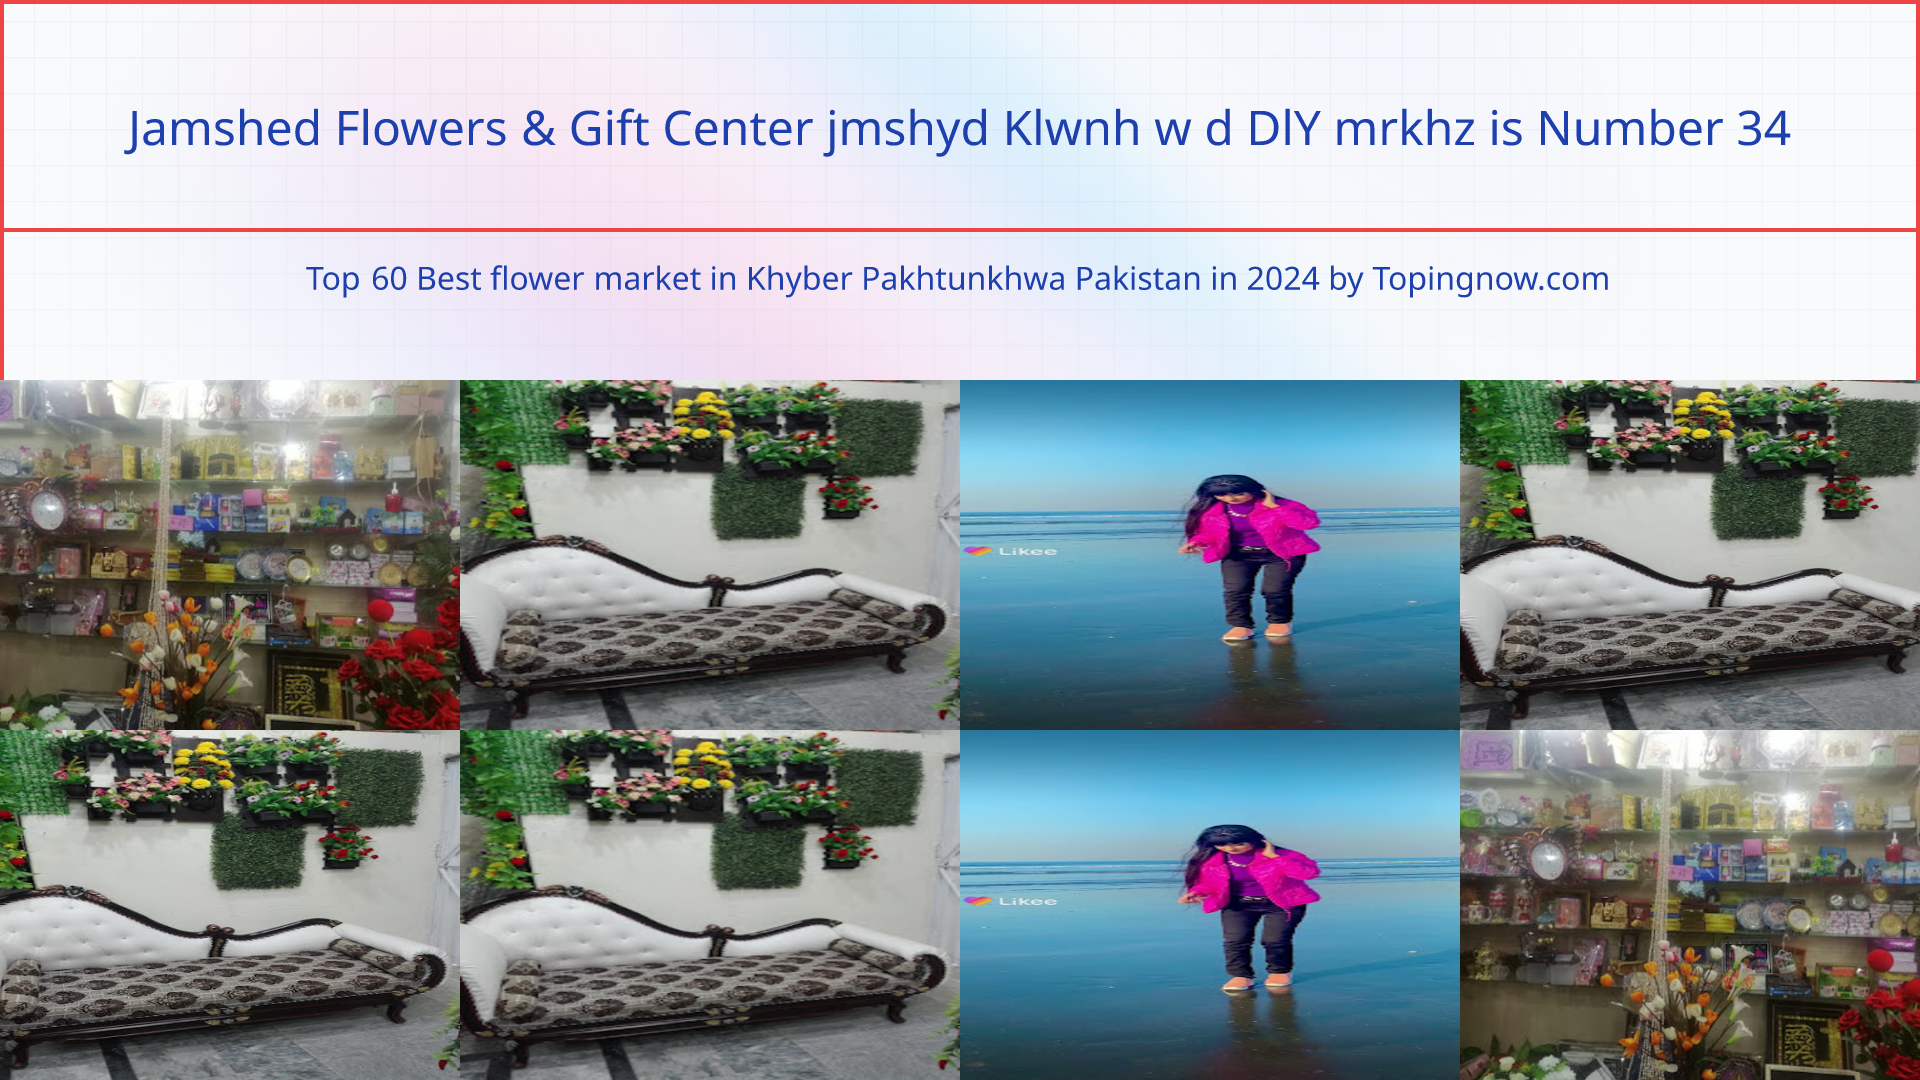 Jamshed Flowers & Gift Center jmshyd Klwnh w d DlY mrkhz: Top 60 Best flower market in Khyber Pakhtunkhwa Pakistan in 2024